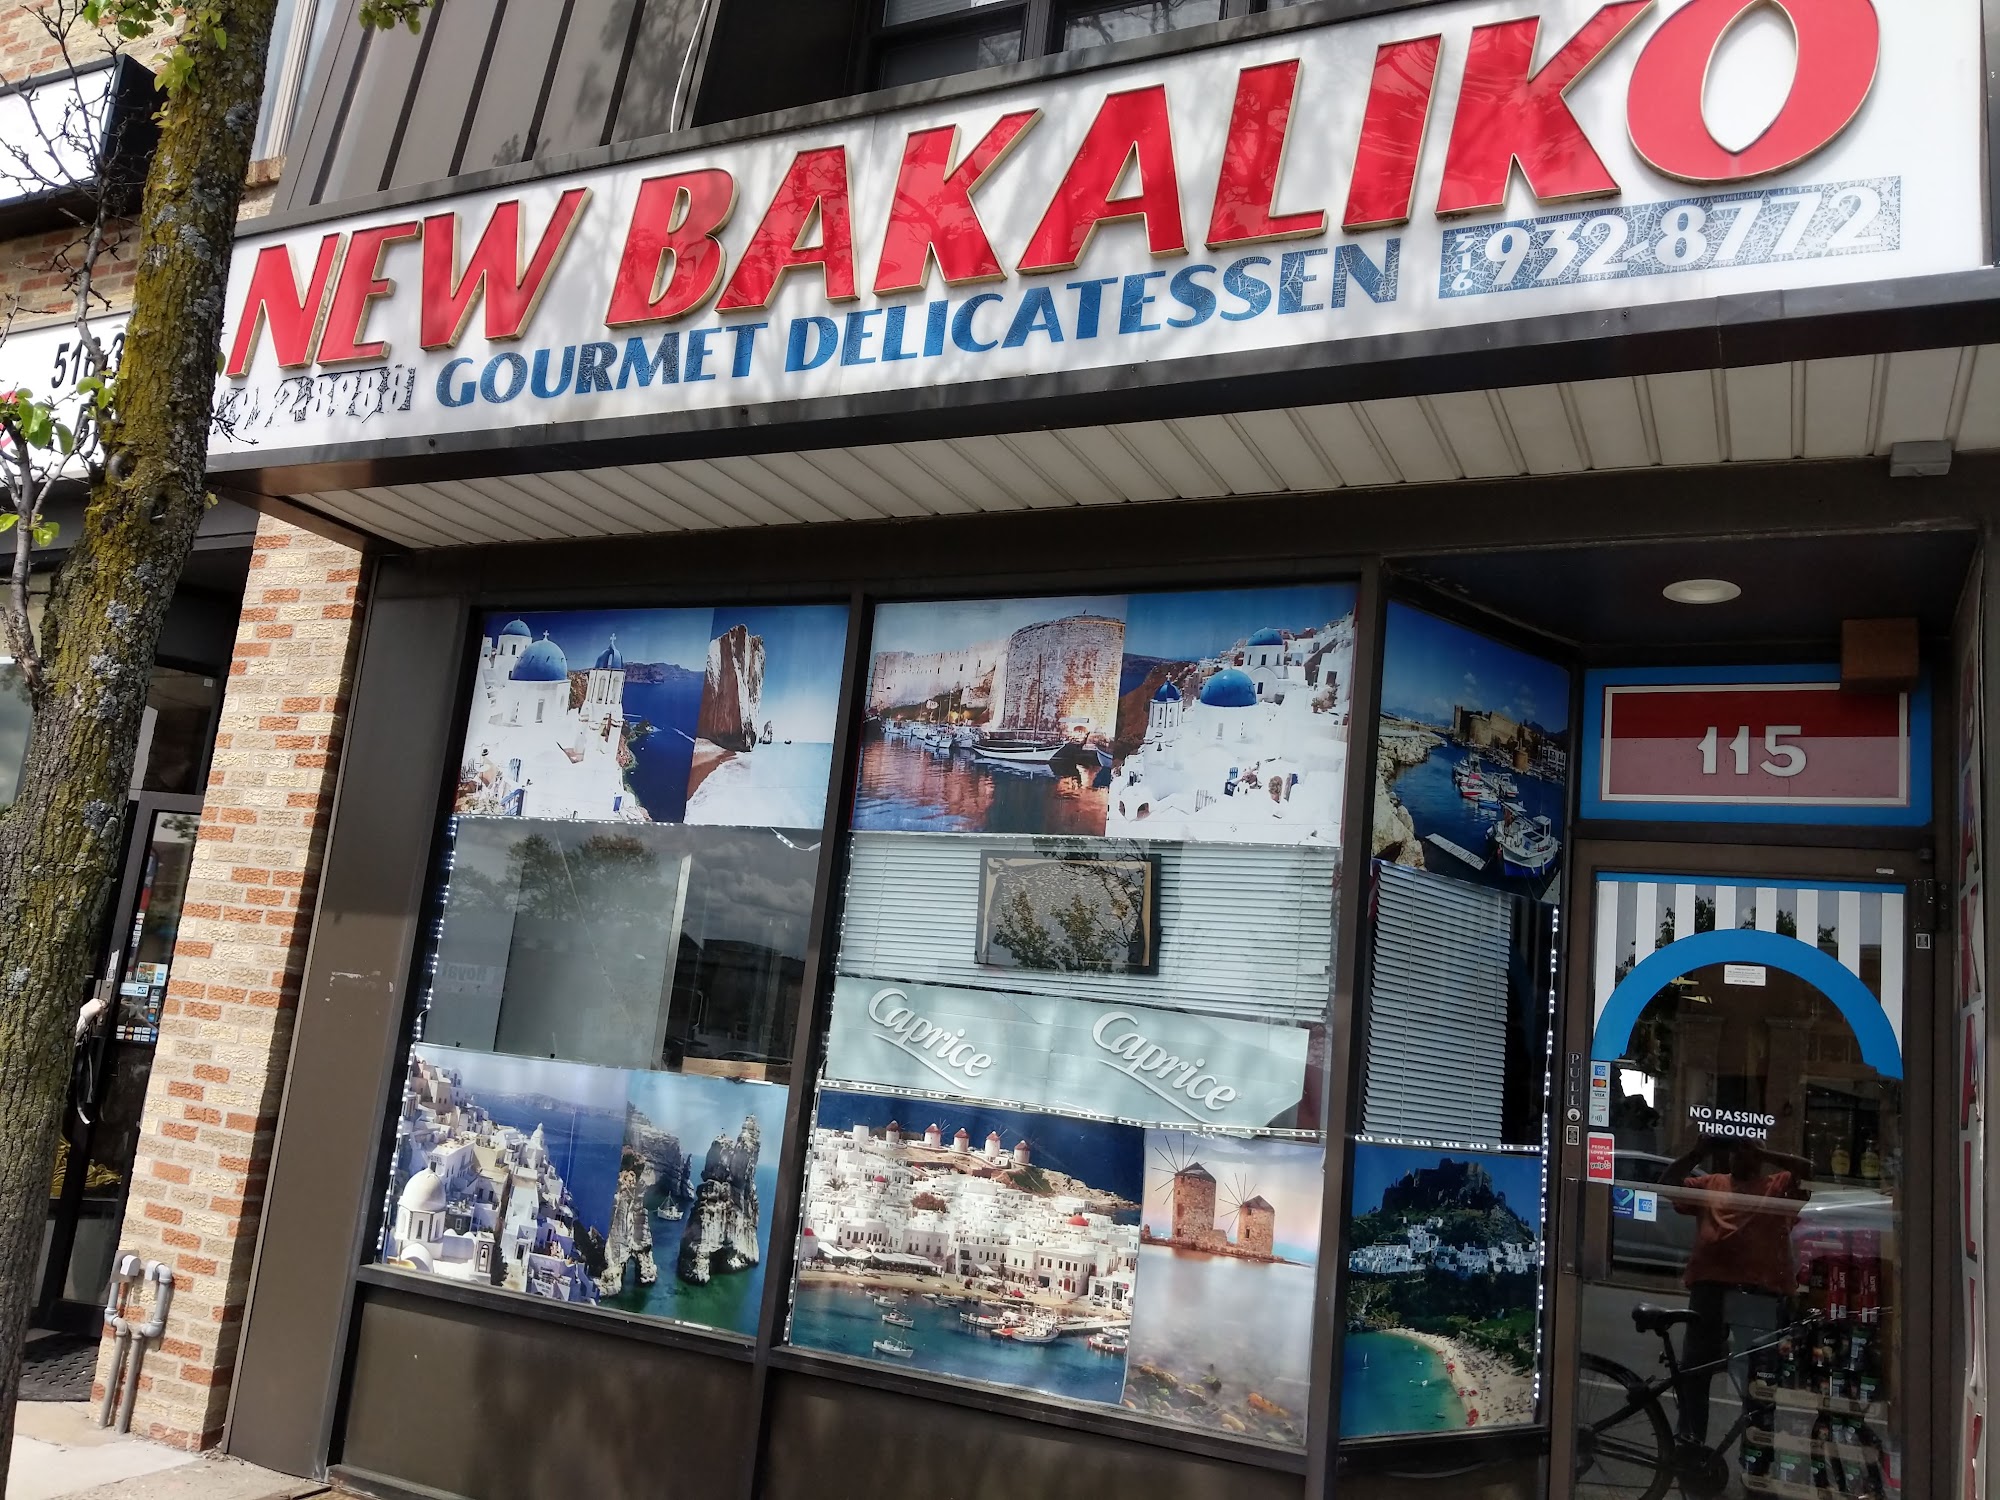 New Bakaliko Greek Grocery Store